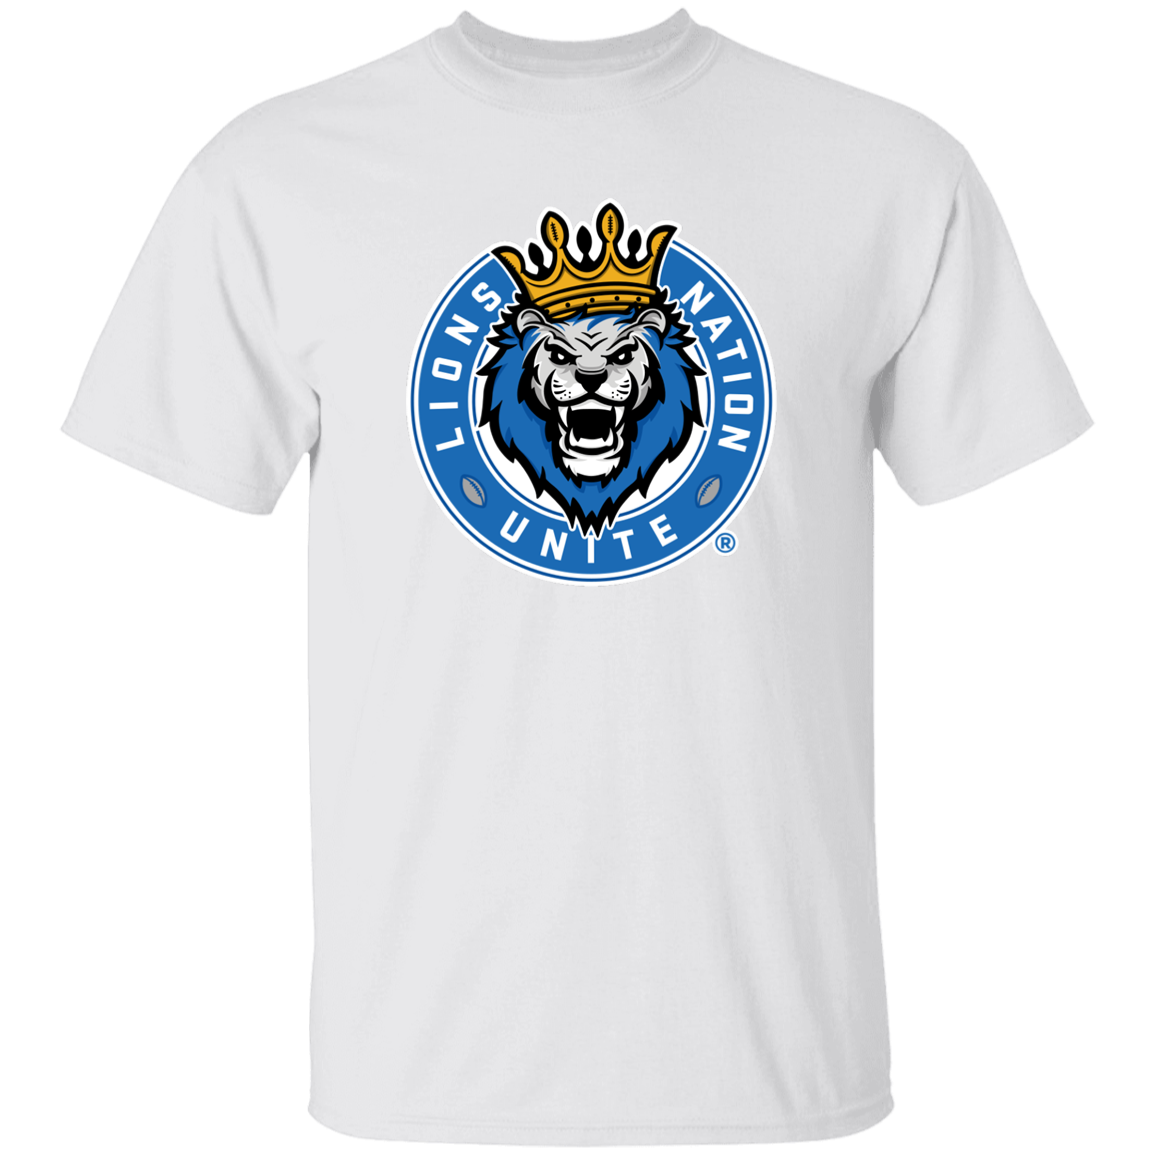 Lions Nation Unite - G500 5.3 oz. T-Shirt